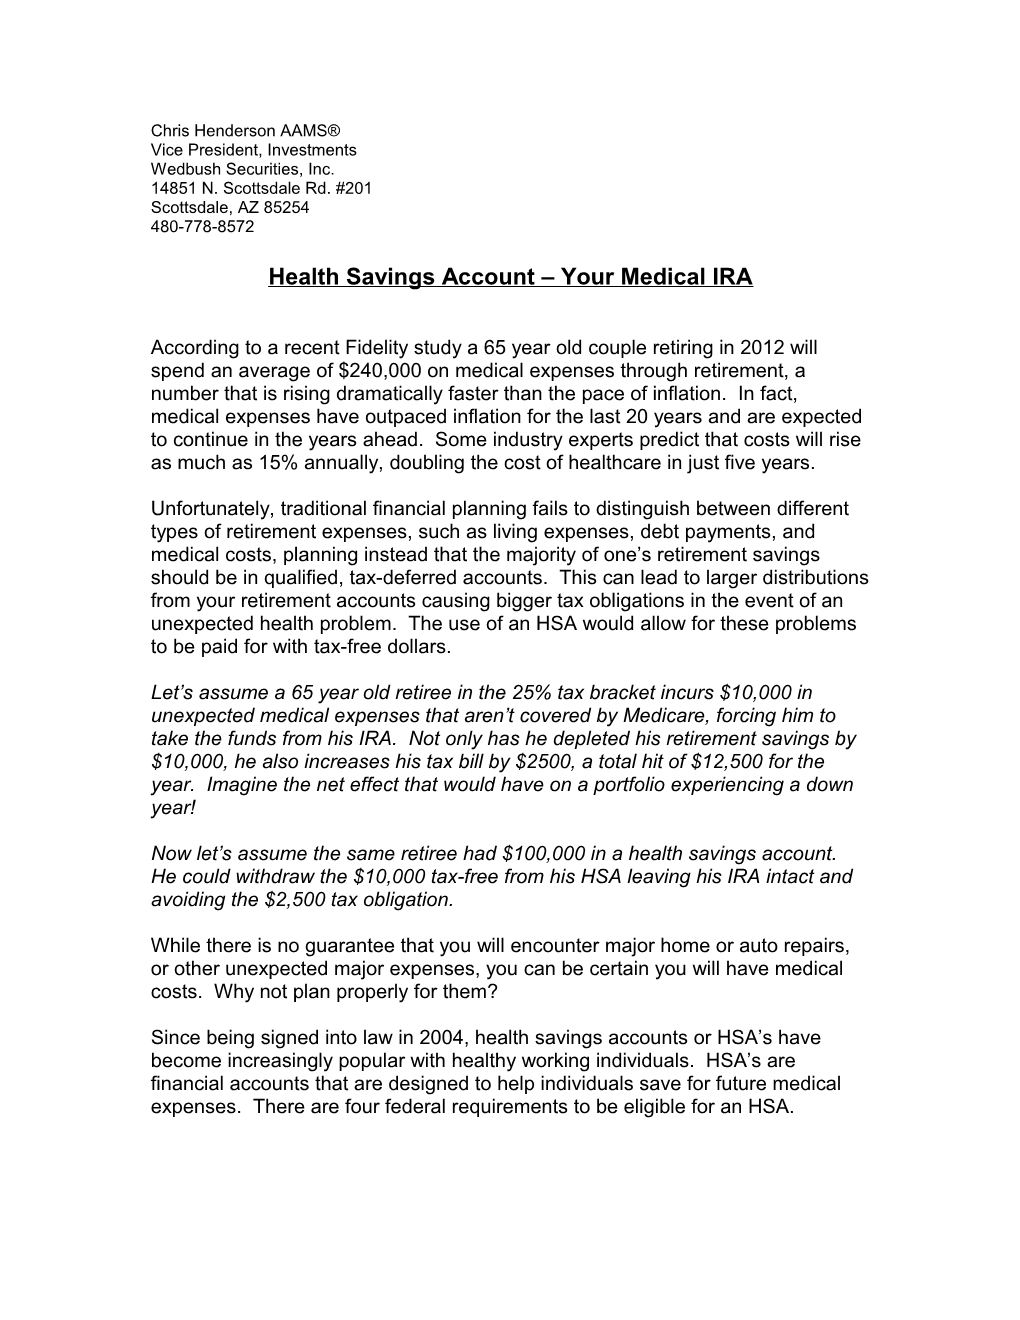 Health Savings Account – Your Medical IRA